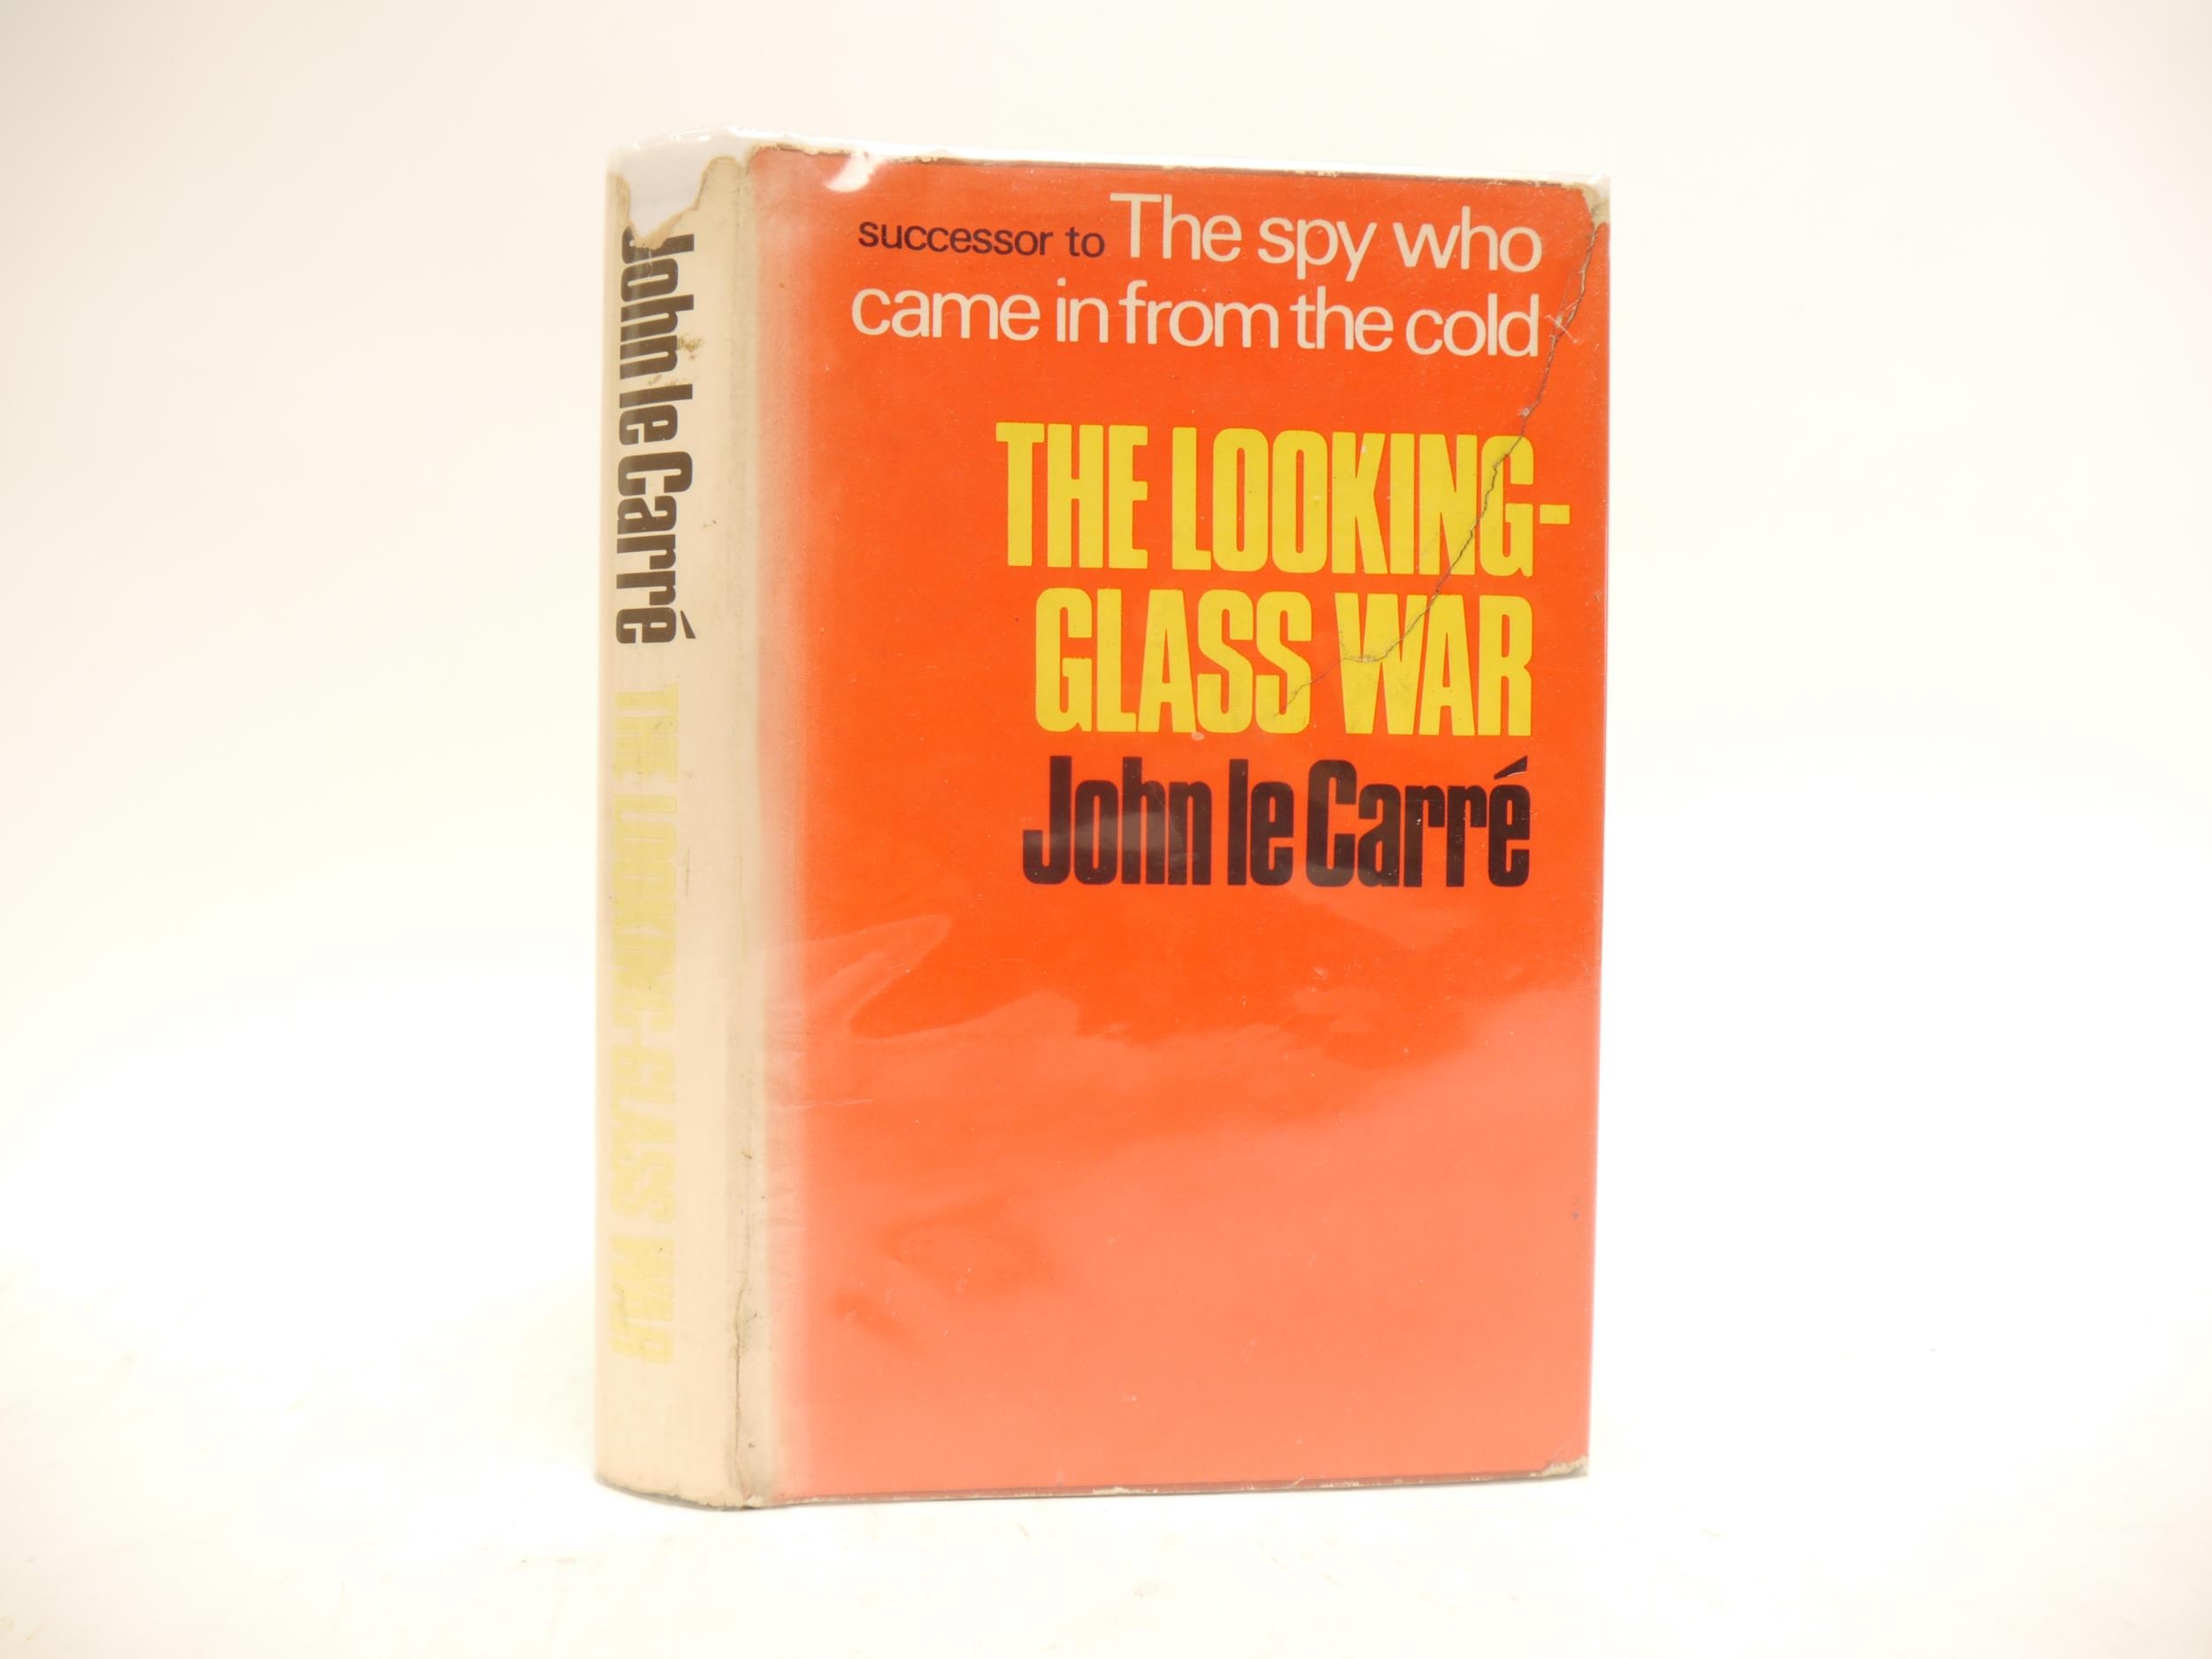 John le Carré: 'The Looking'Glass War', London, Heinemann, 1965, 1st edition, original cloth - Image 2 of 3